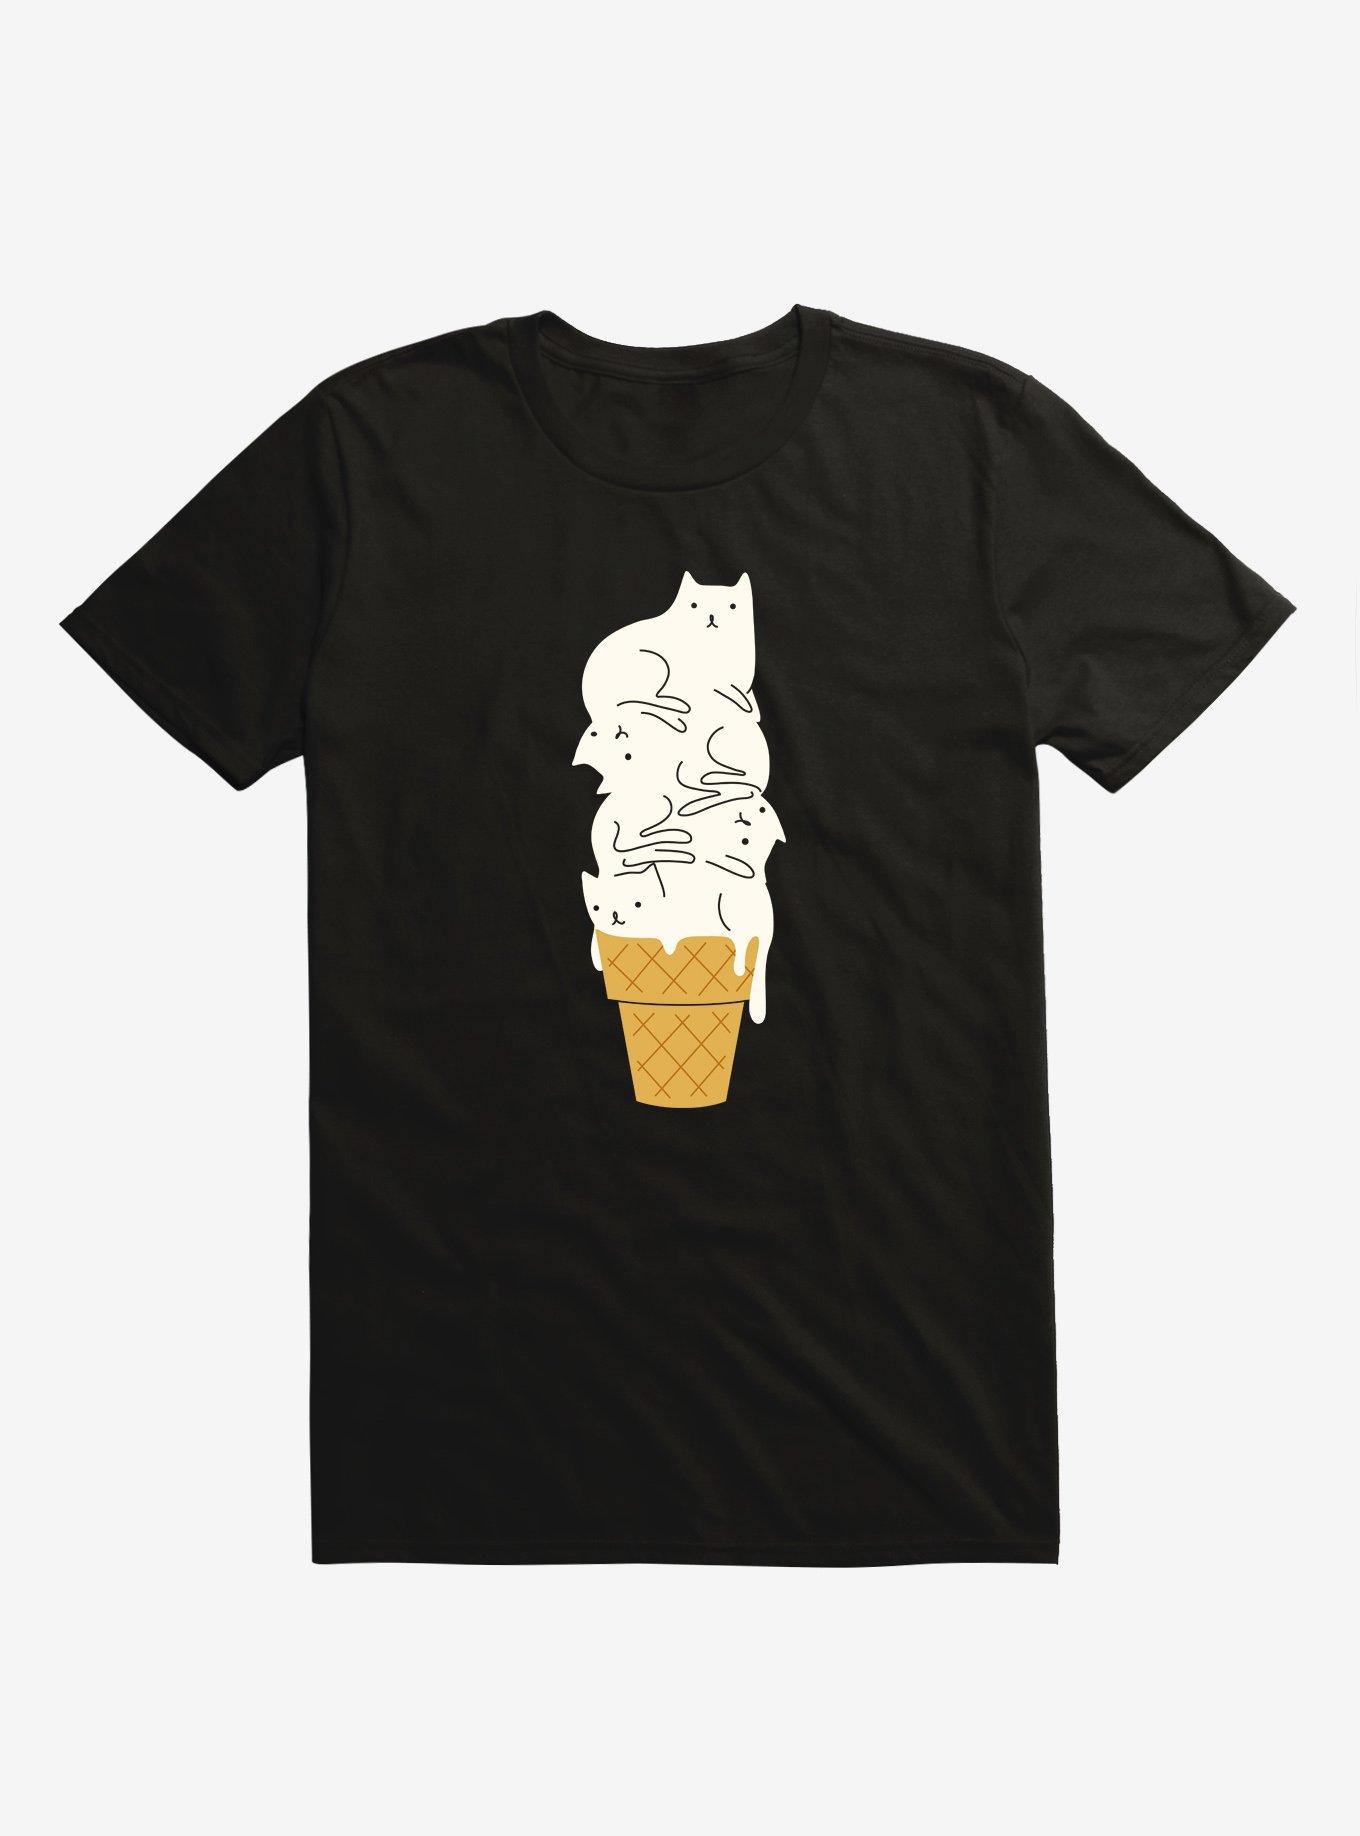 Meowlting Ice Cream Cats Black T-Shirt